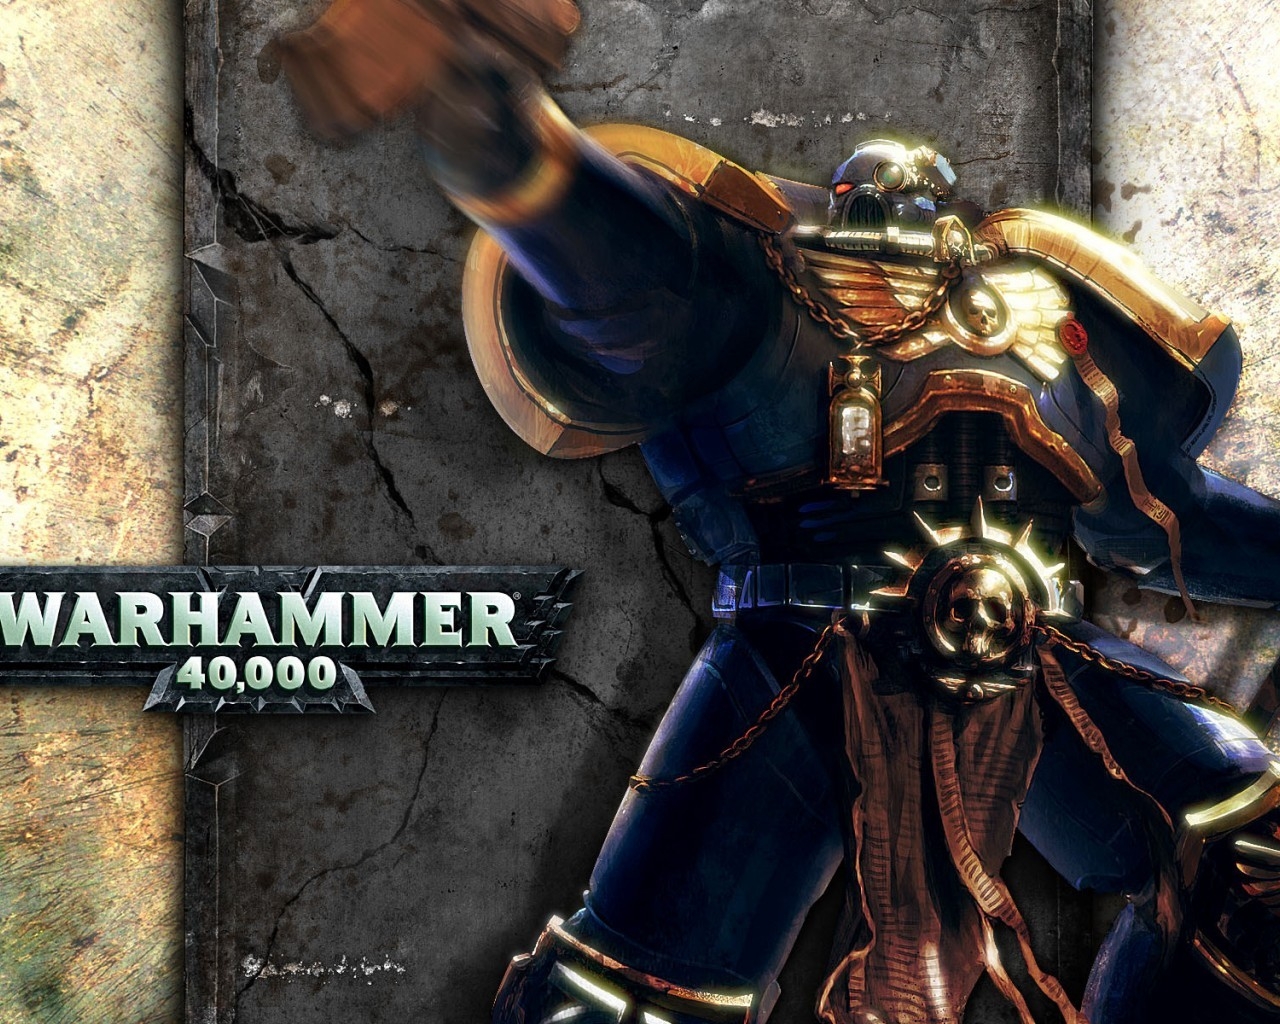 Warhammer 40k Poster for 1280 x 1024 resolution